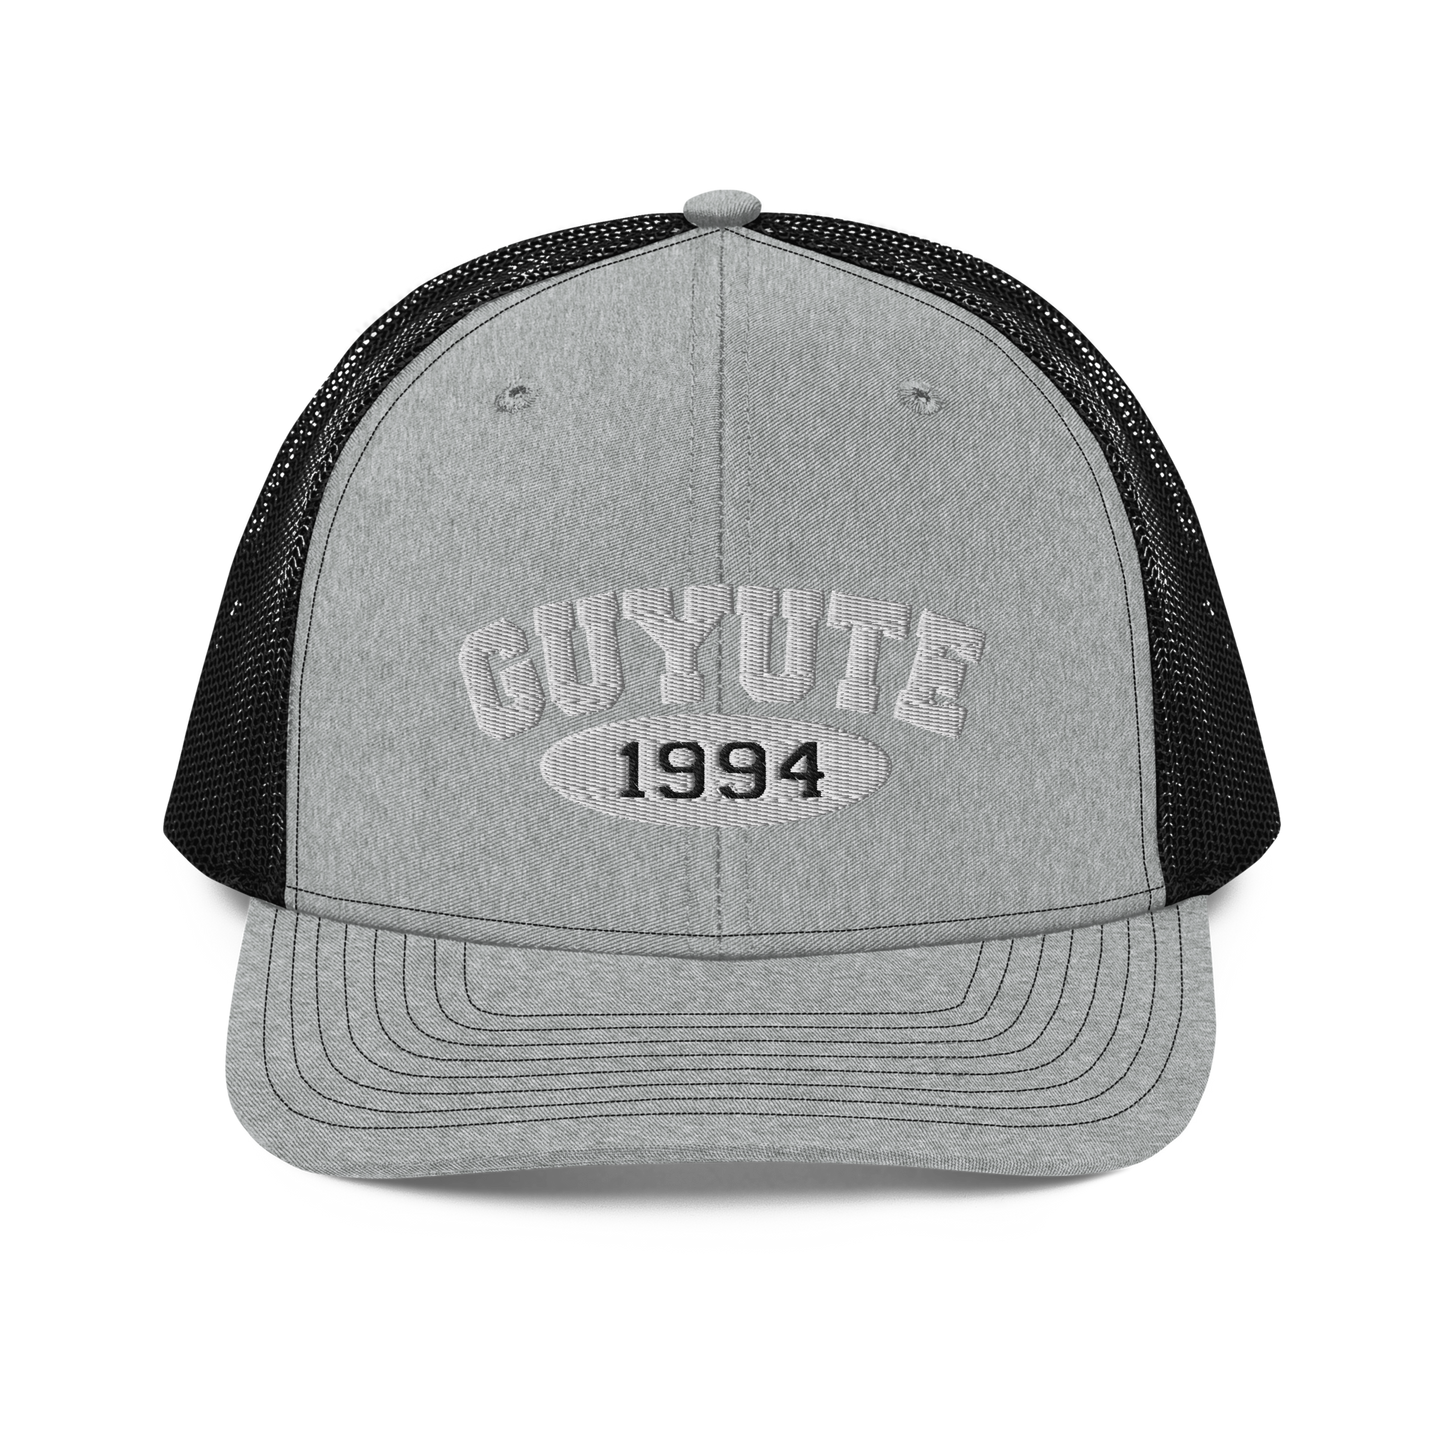 Guyute 1994 Embroidery 112 Snapback Cap